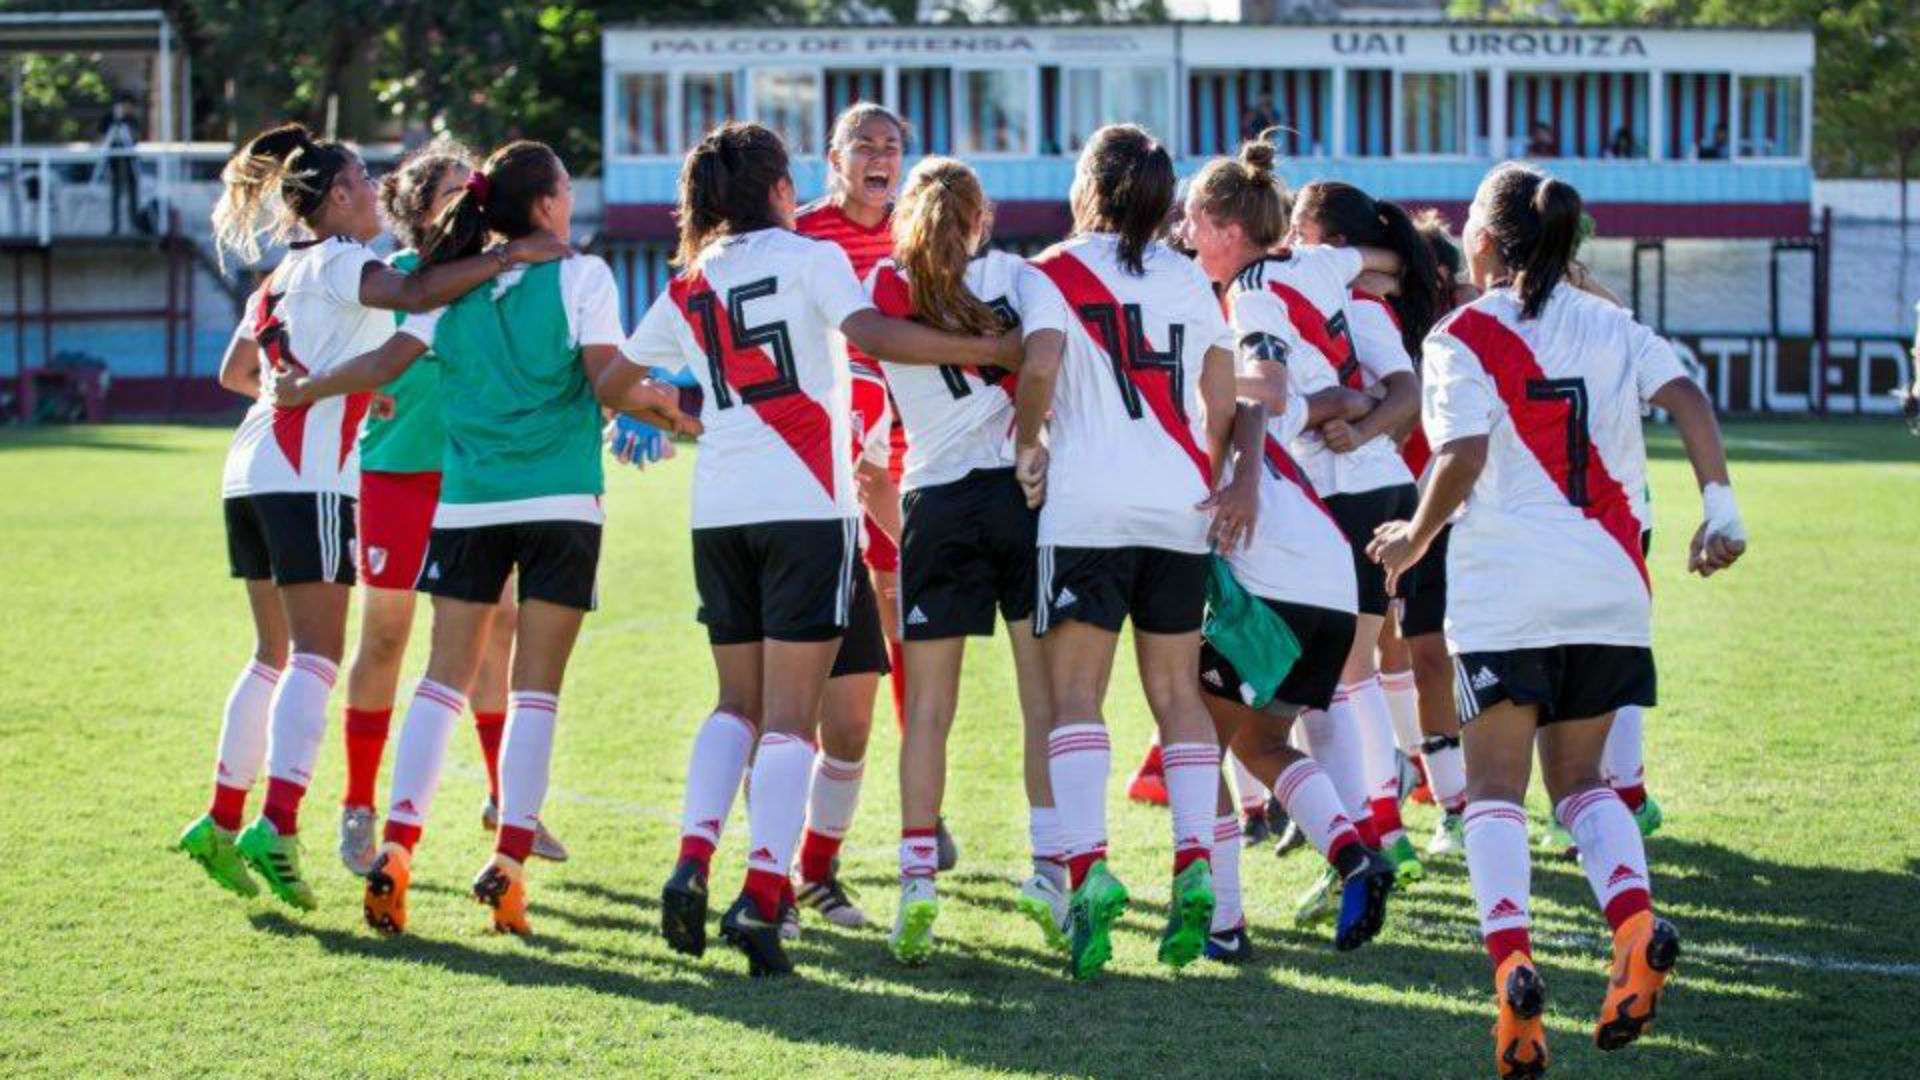 River UAI Urquiza Fecha 7 futbol femenino Primera A